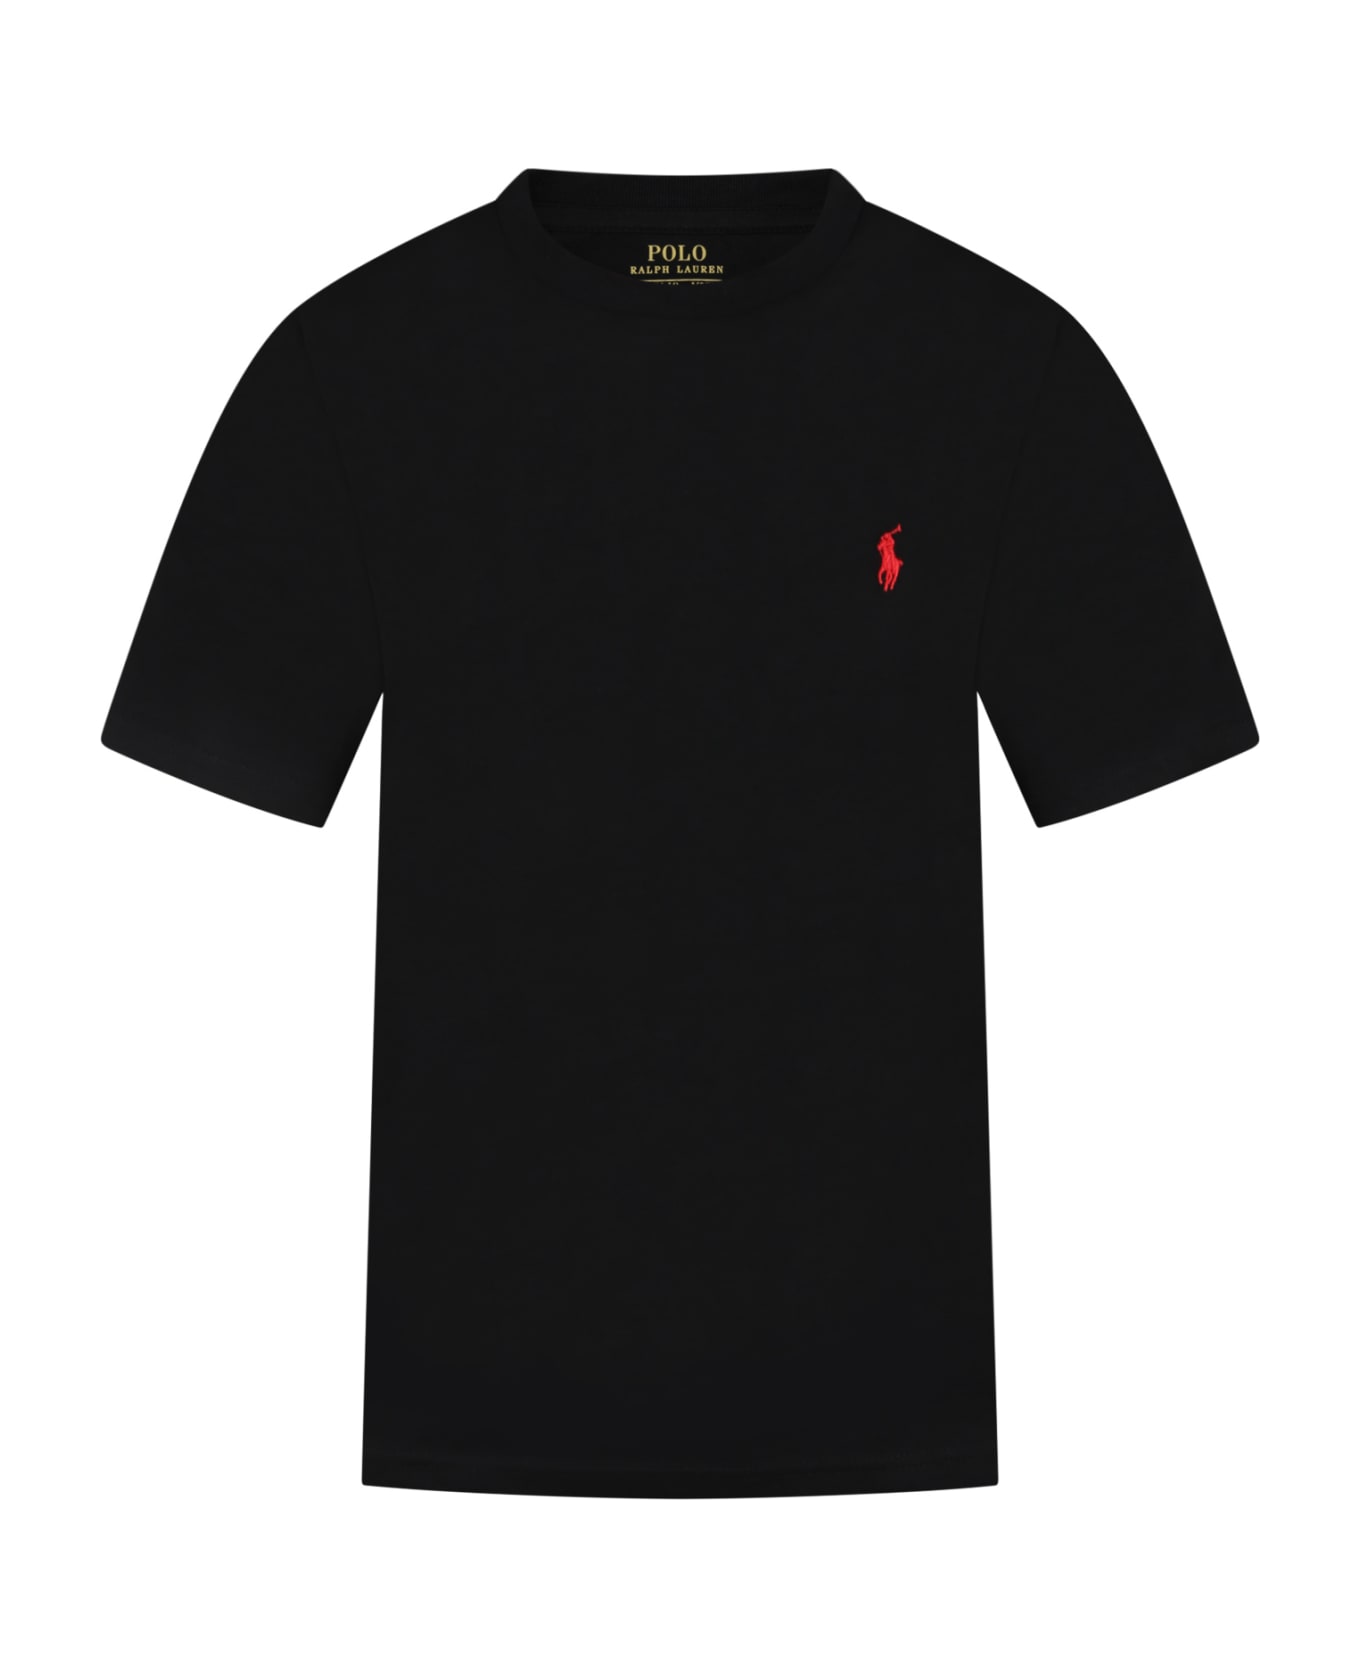 Ralph Lauren Black T-shirt For Kids With Blue Pony Logo - Black